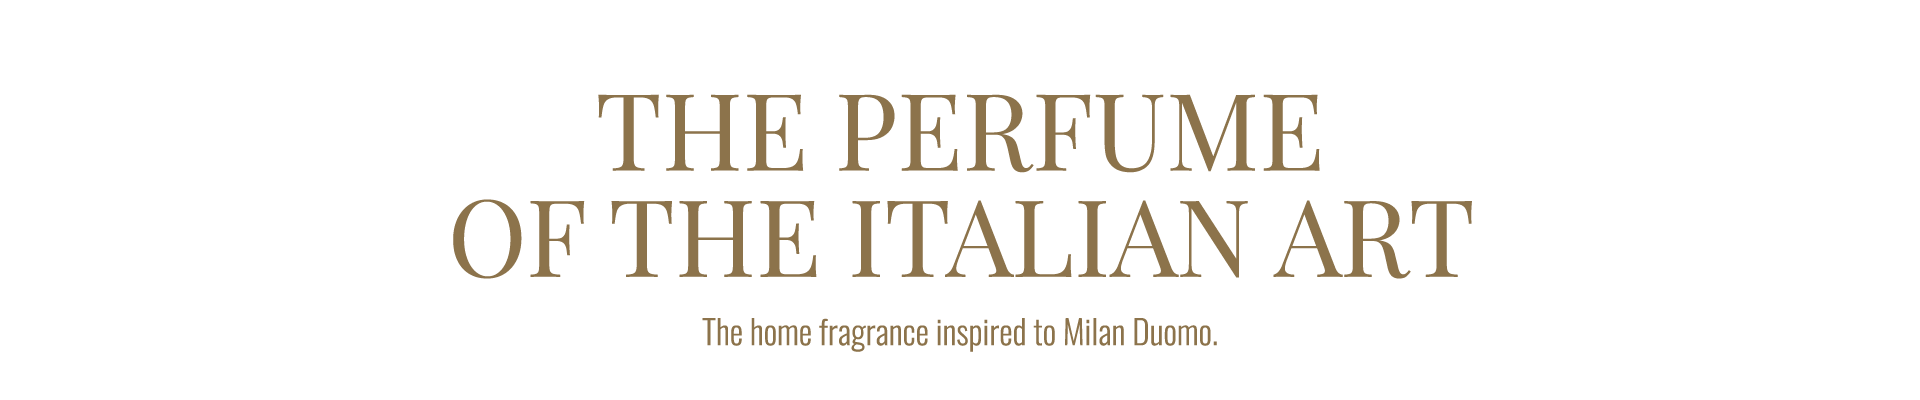 perfume-of-italian-art